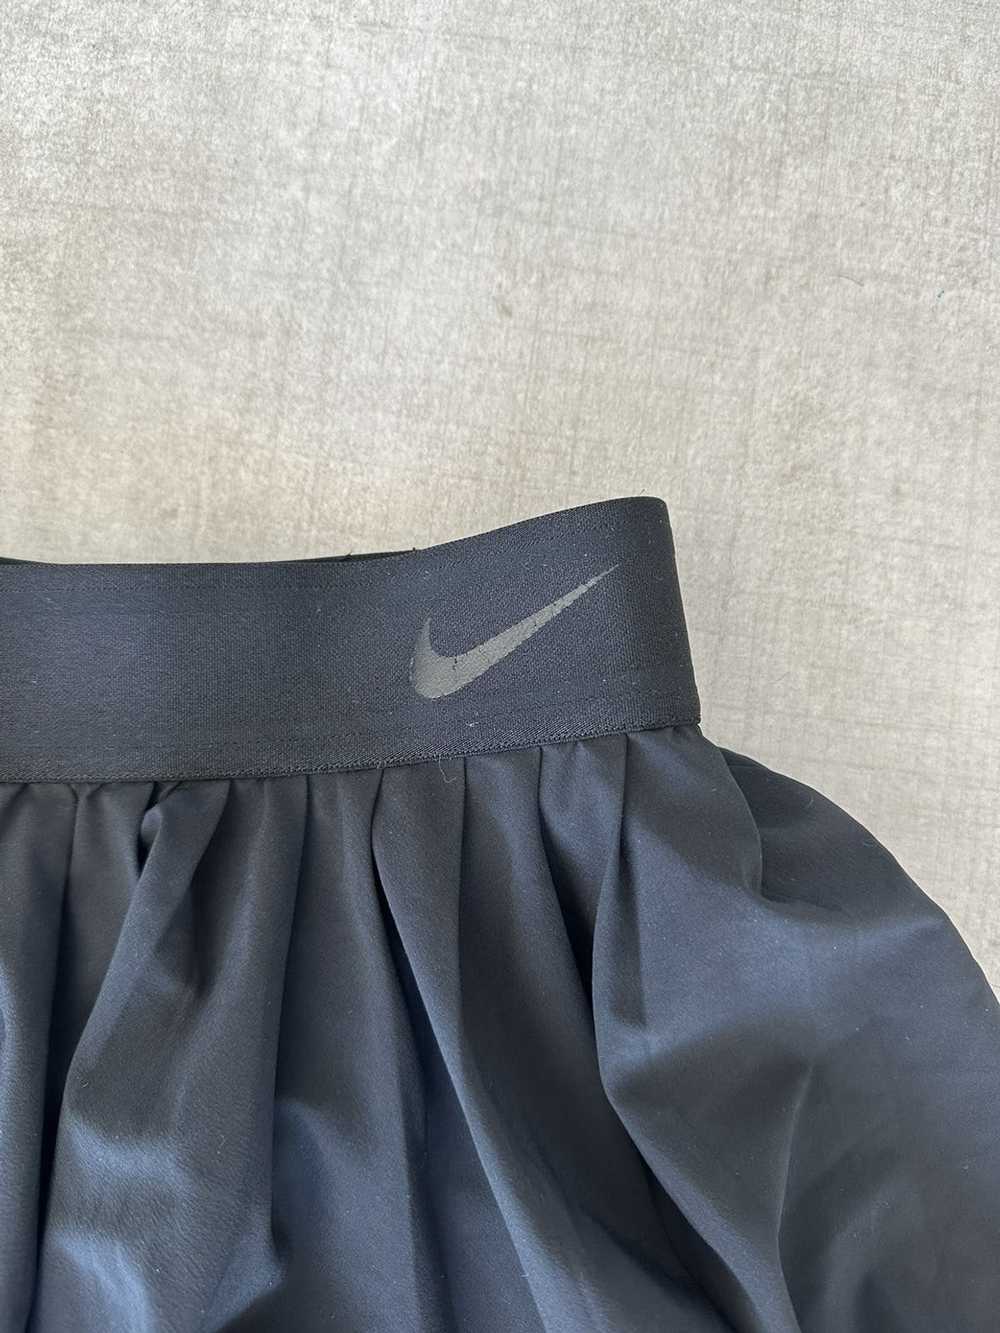 Nike Nike Dri-Fit Pleated Tennis Skirt - image 2